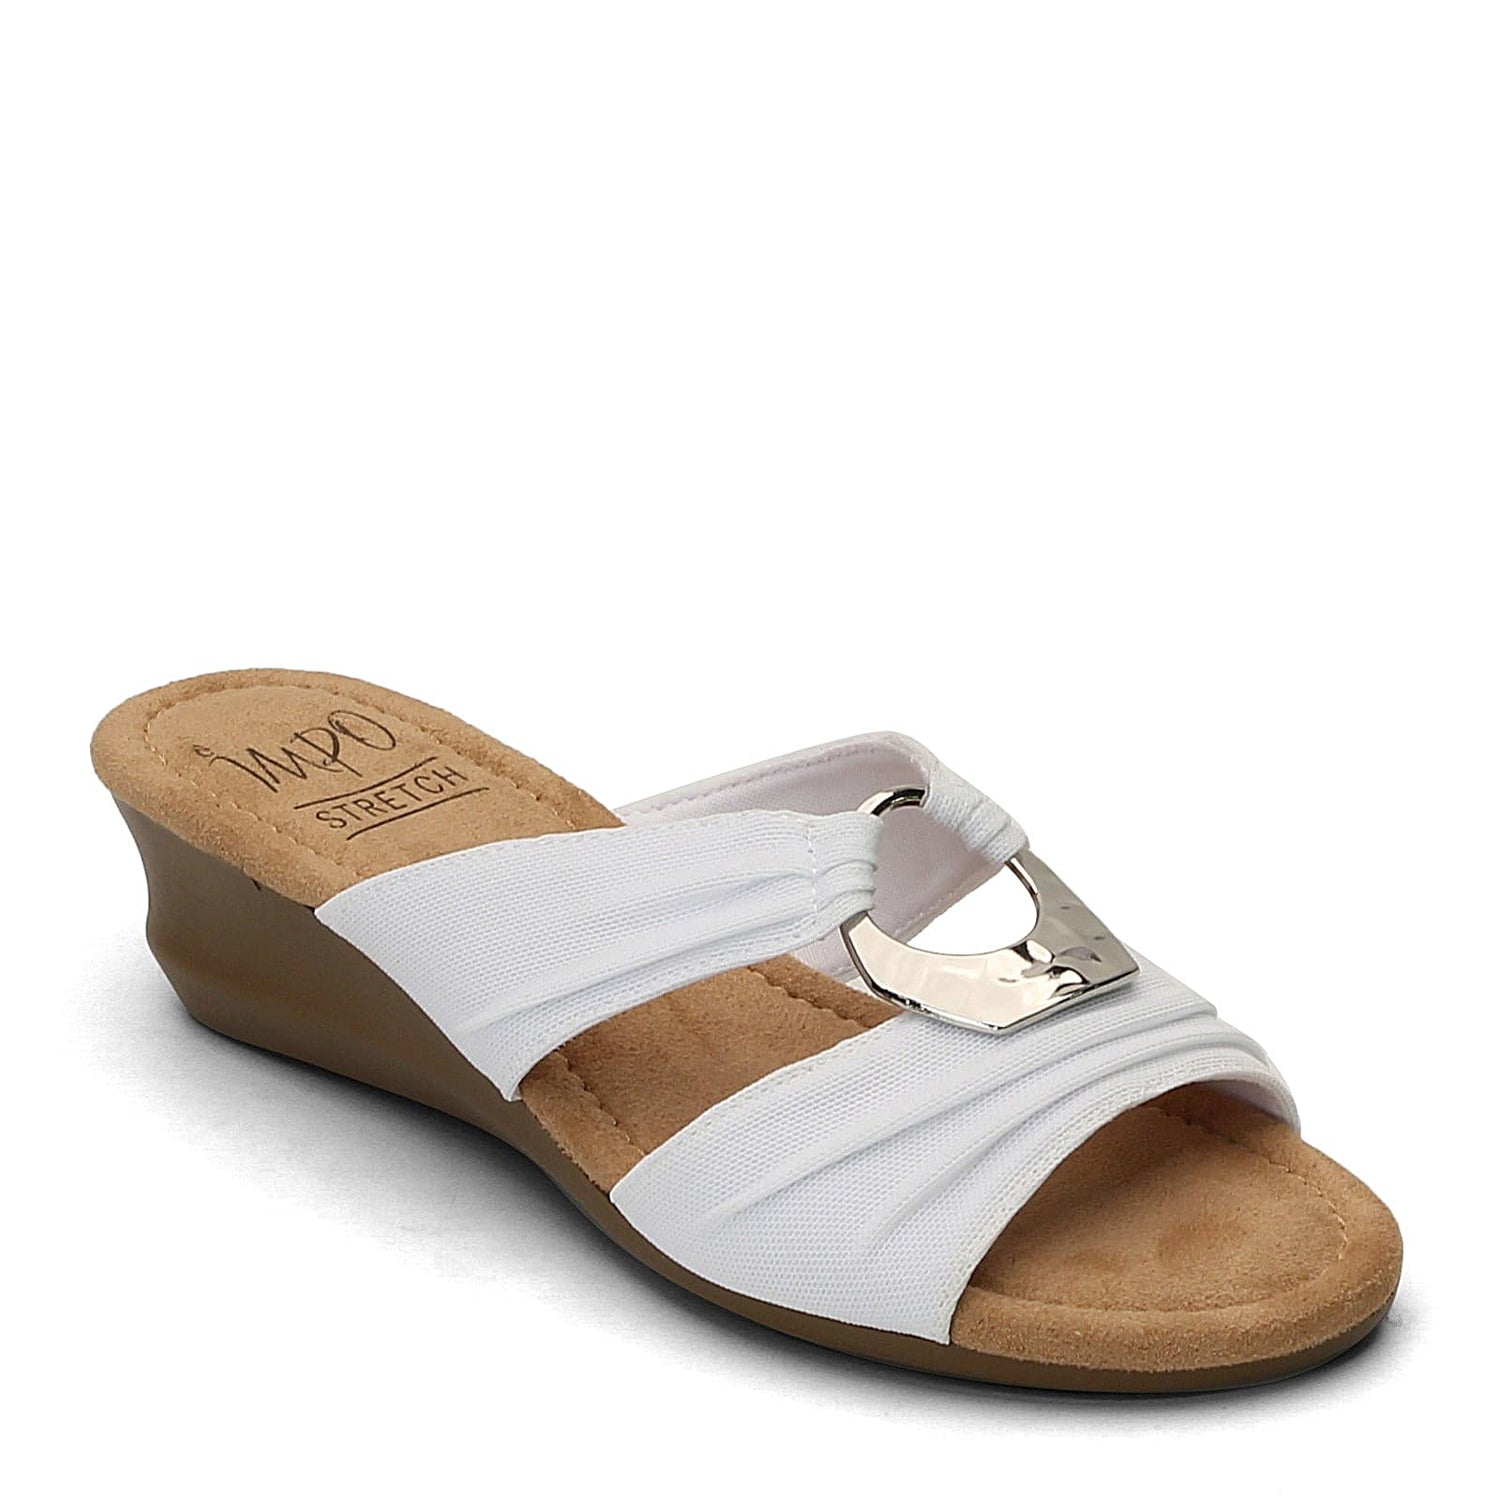 Peltz Shoes  Women's Impo Glinda Sandal